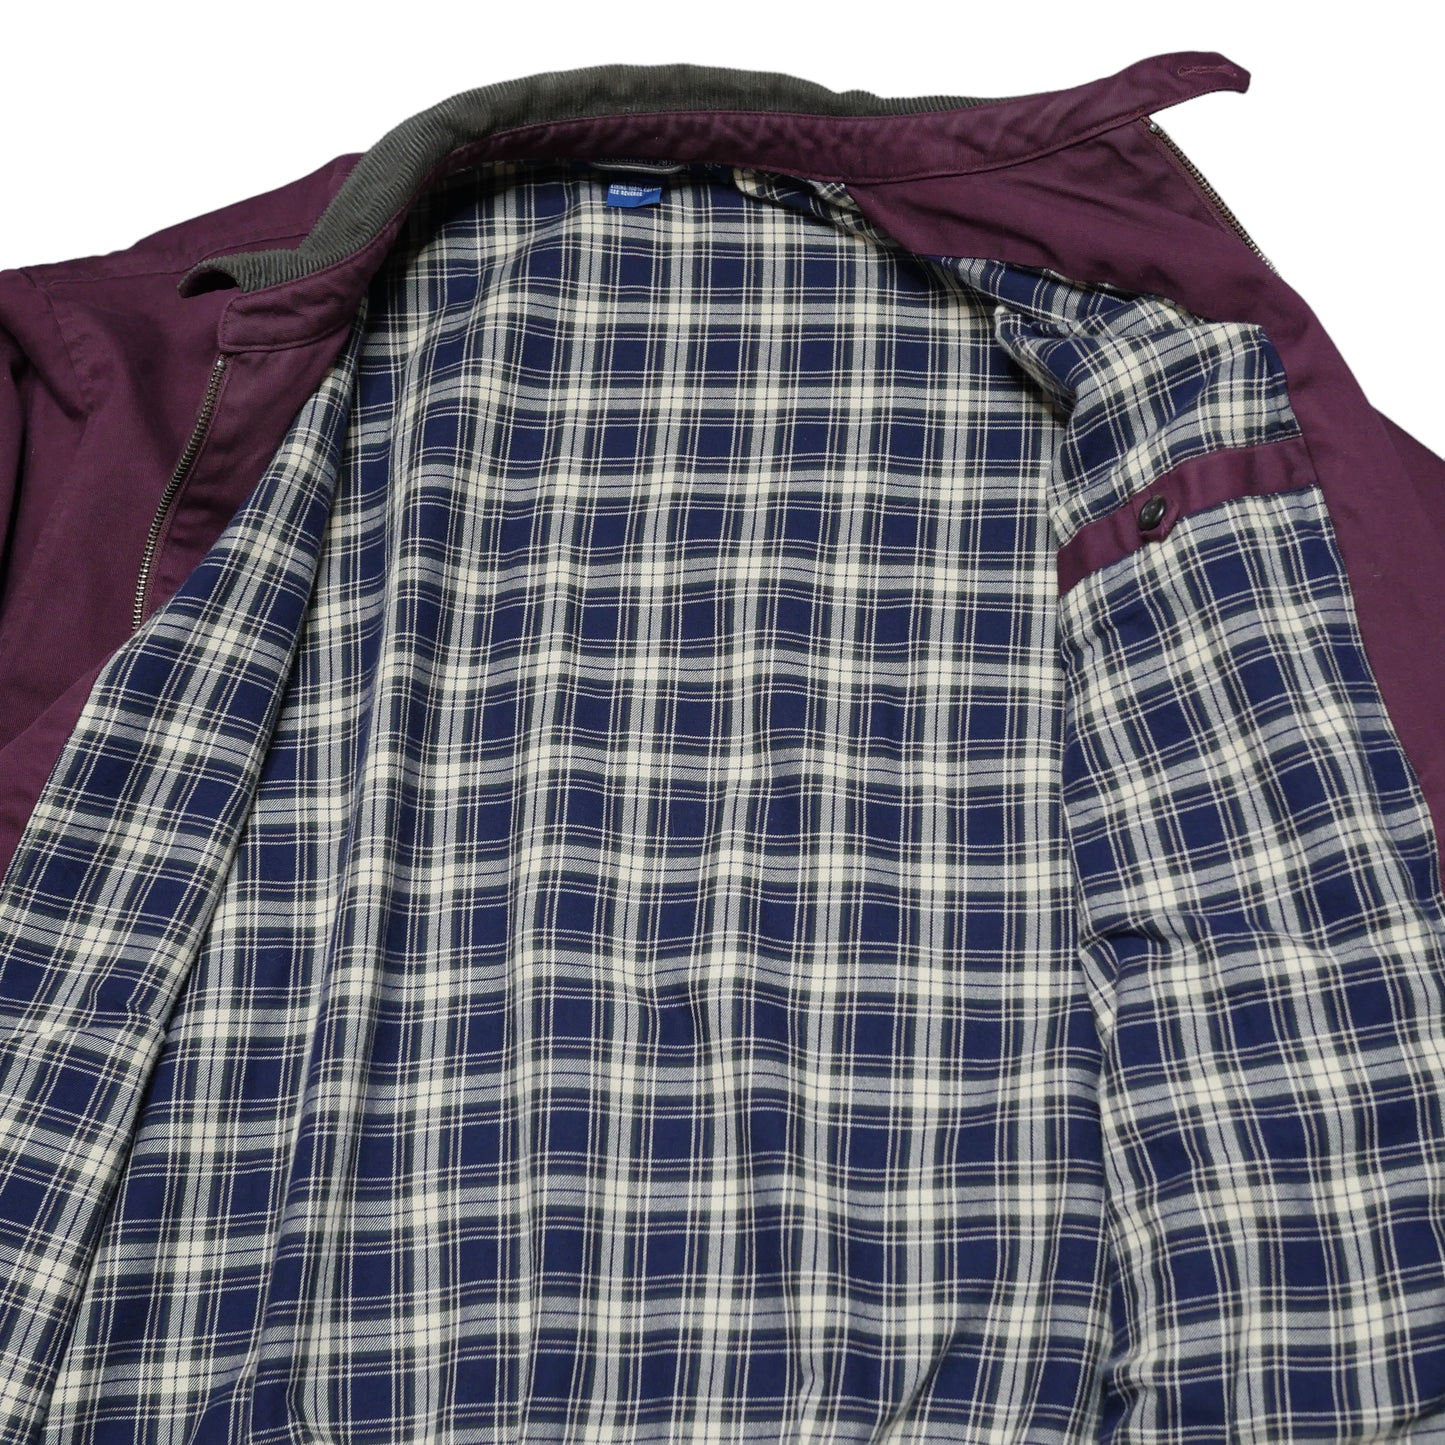 Polo Ralph Lauren Harrington Jacket - Large